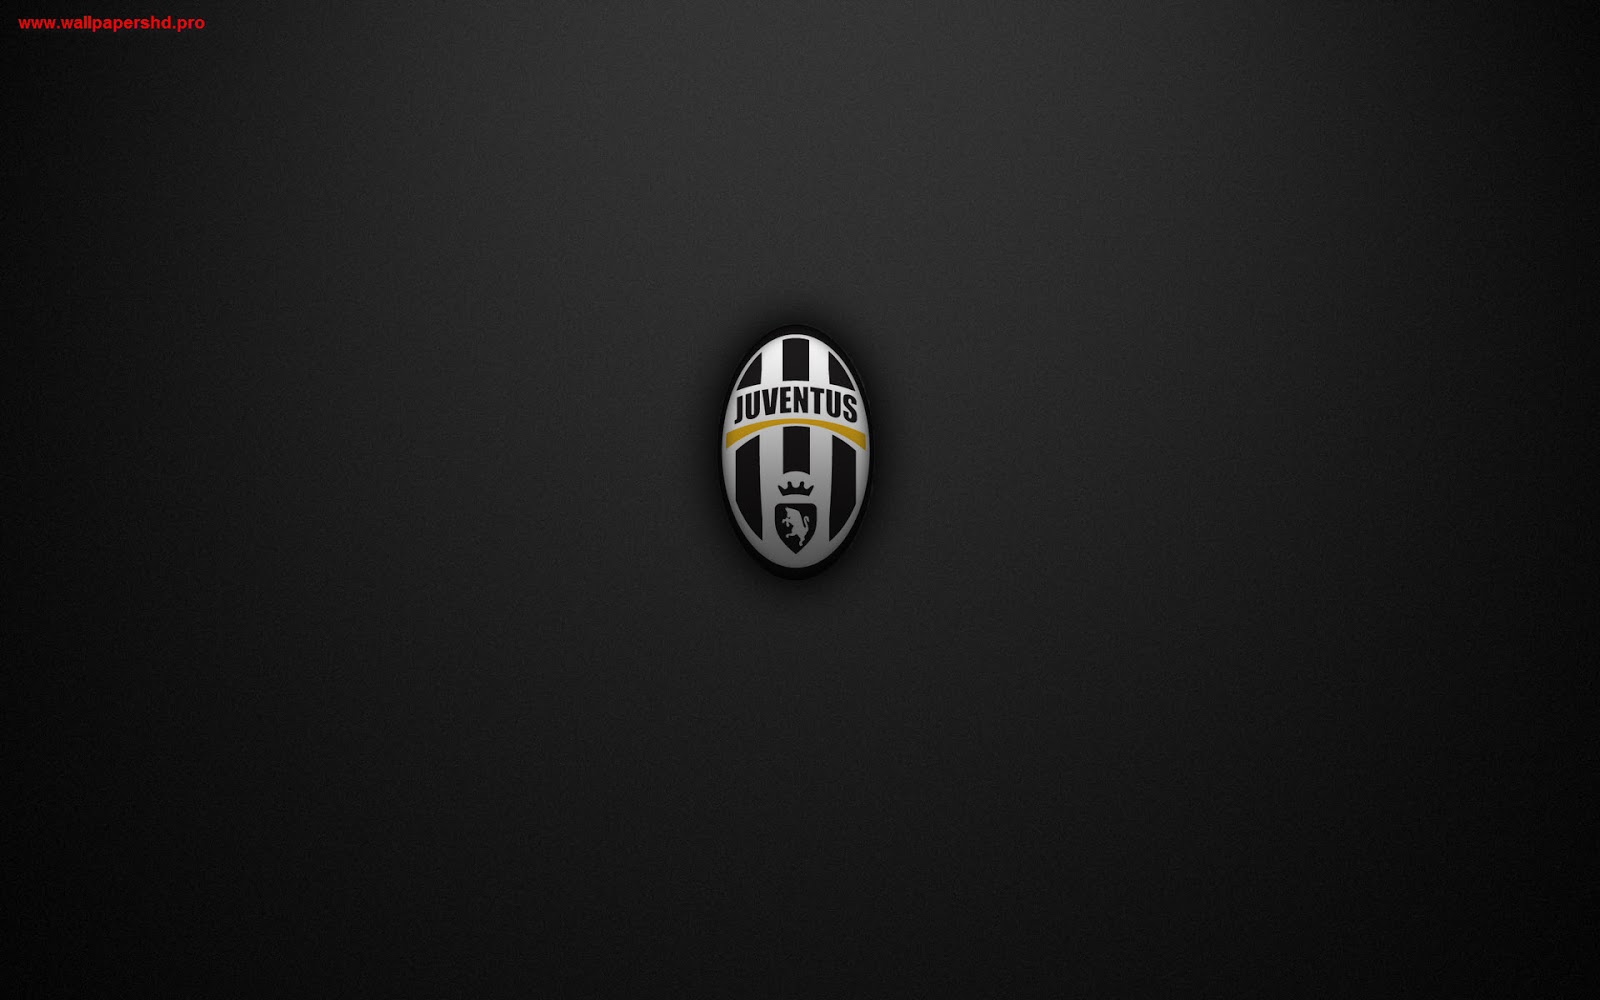 ... of Juventus Wallpapers Hd 2012 New Pictures Of Juventus F C